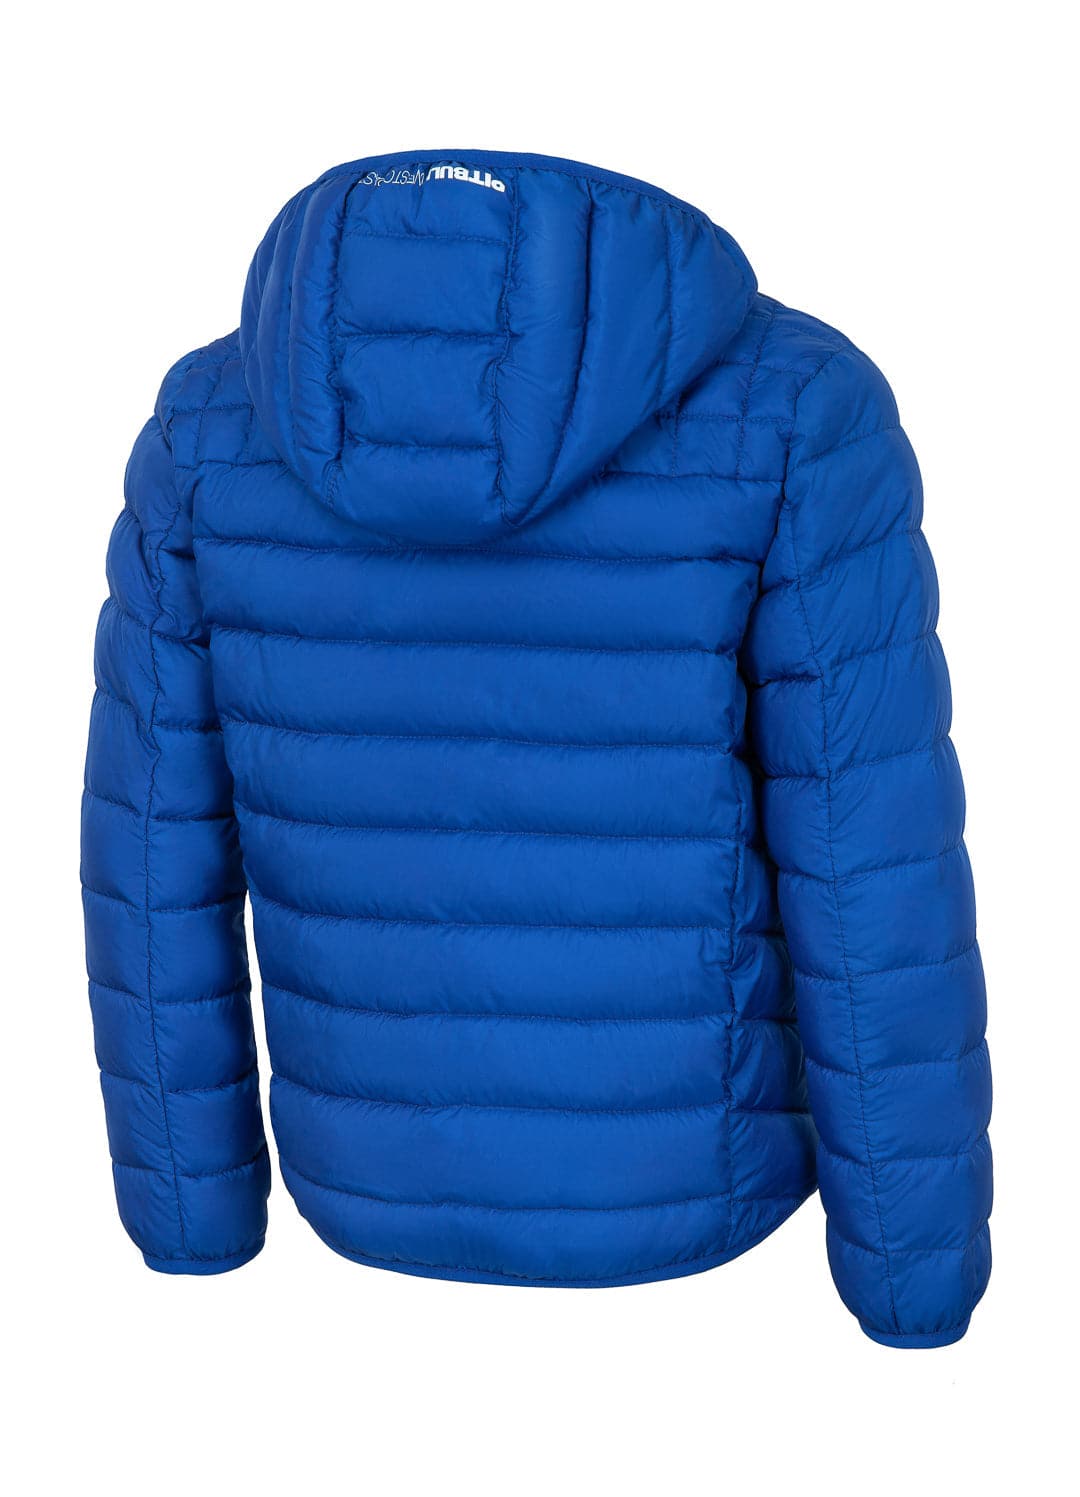 SEACOAST Kids Blue Jacket - Pitbull West Coast International Store 